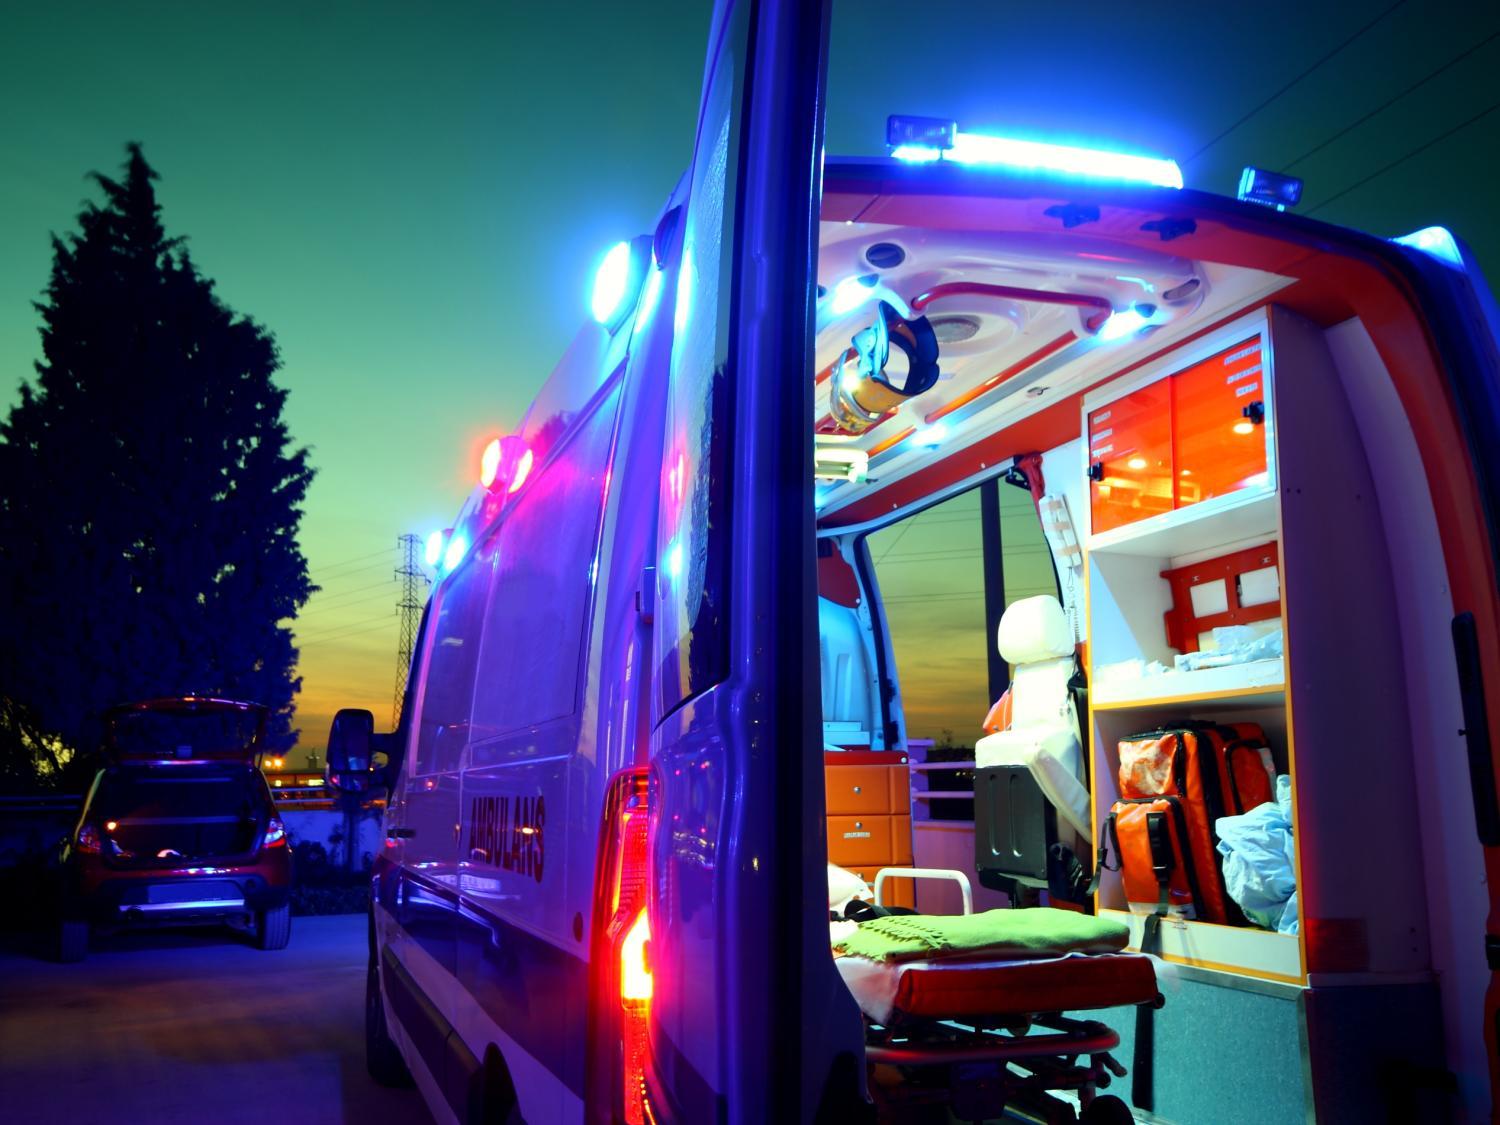 An ambulance responds to an emergency 